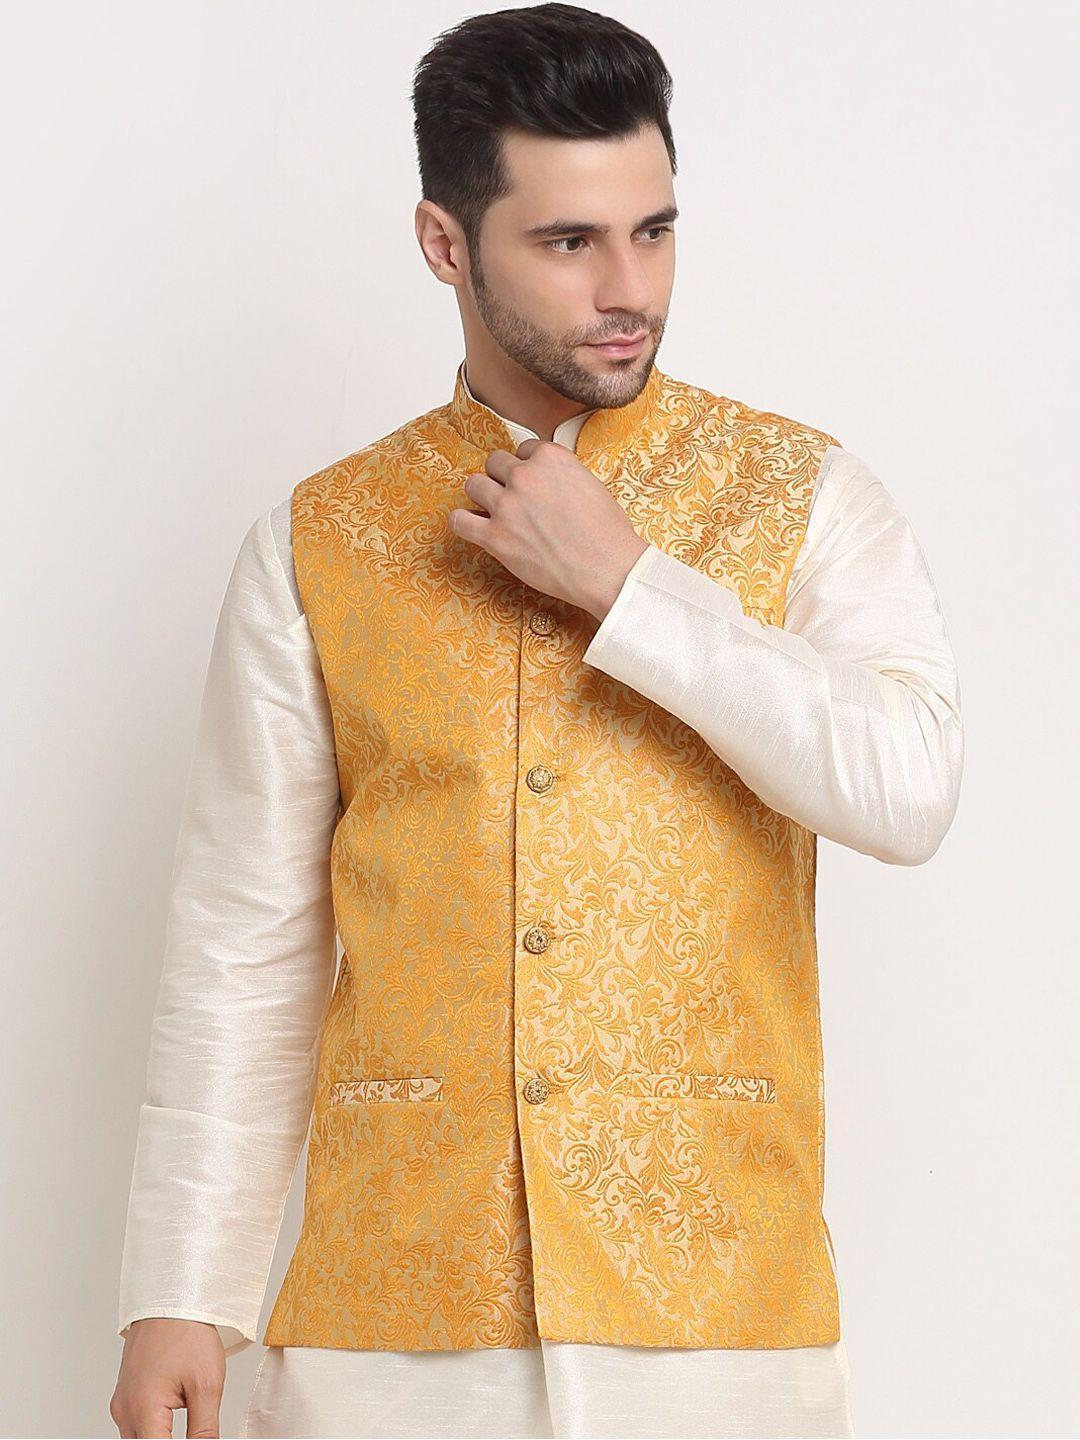 kraft india men beige jacquard woven design nehru jacket